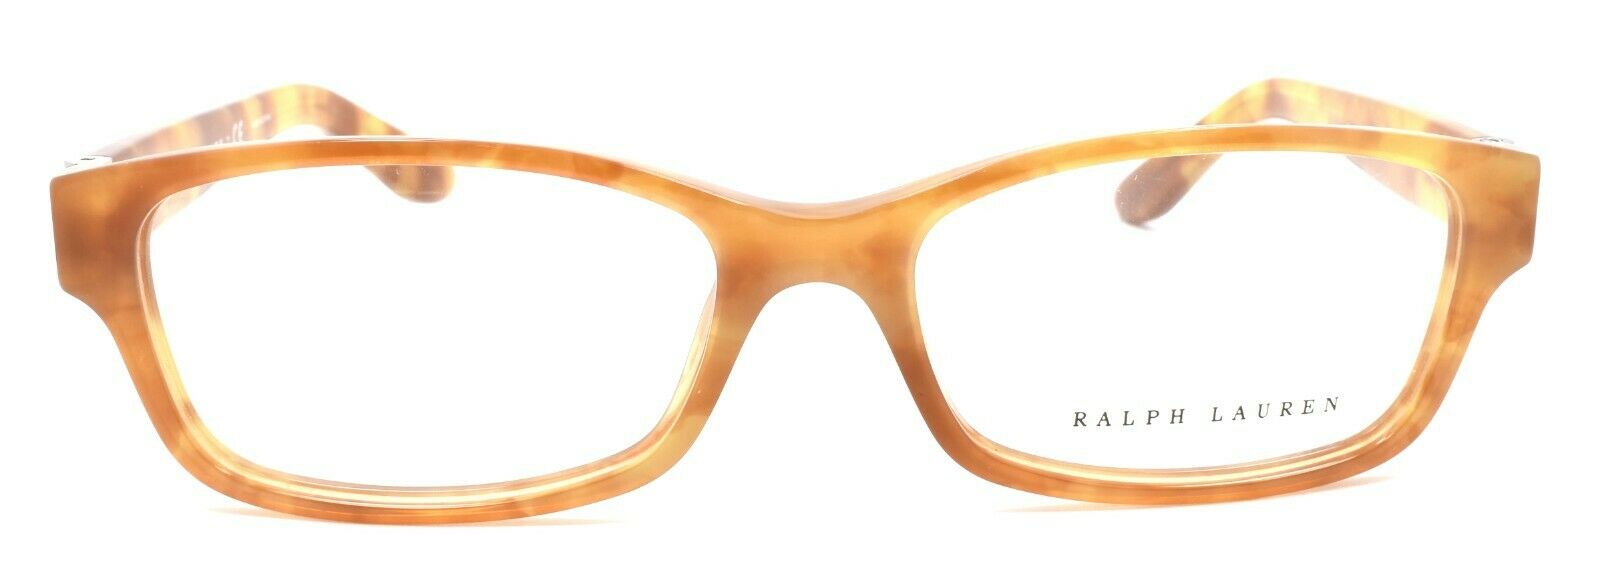 2-Ralph Lauren RL6139 5304 Women's Eyeglasses Frames 52-16-135 Havana Paris-8053672419009-IKSpecs